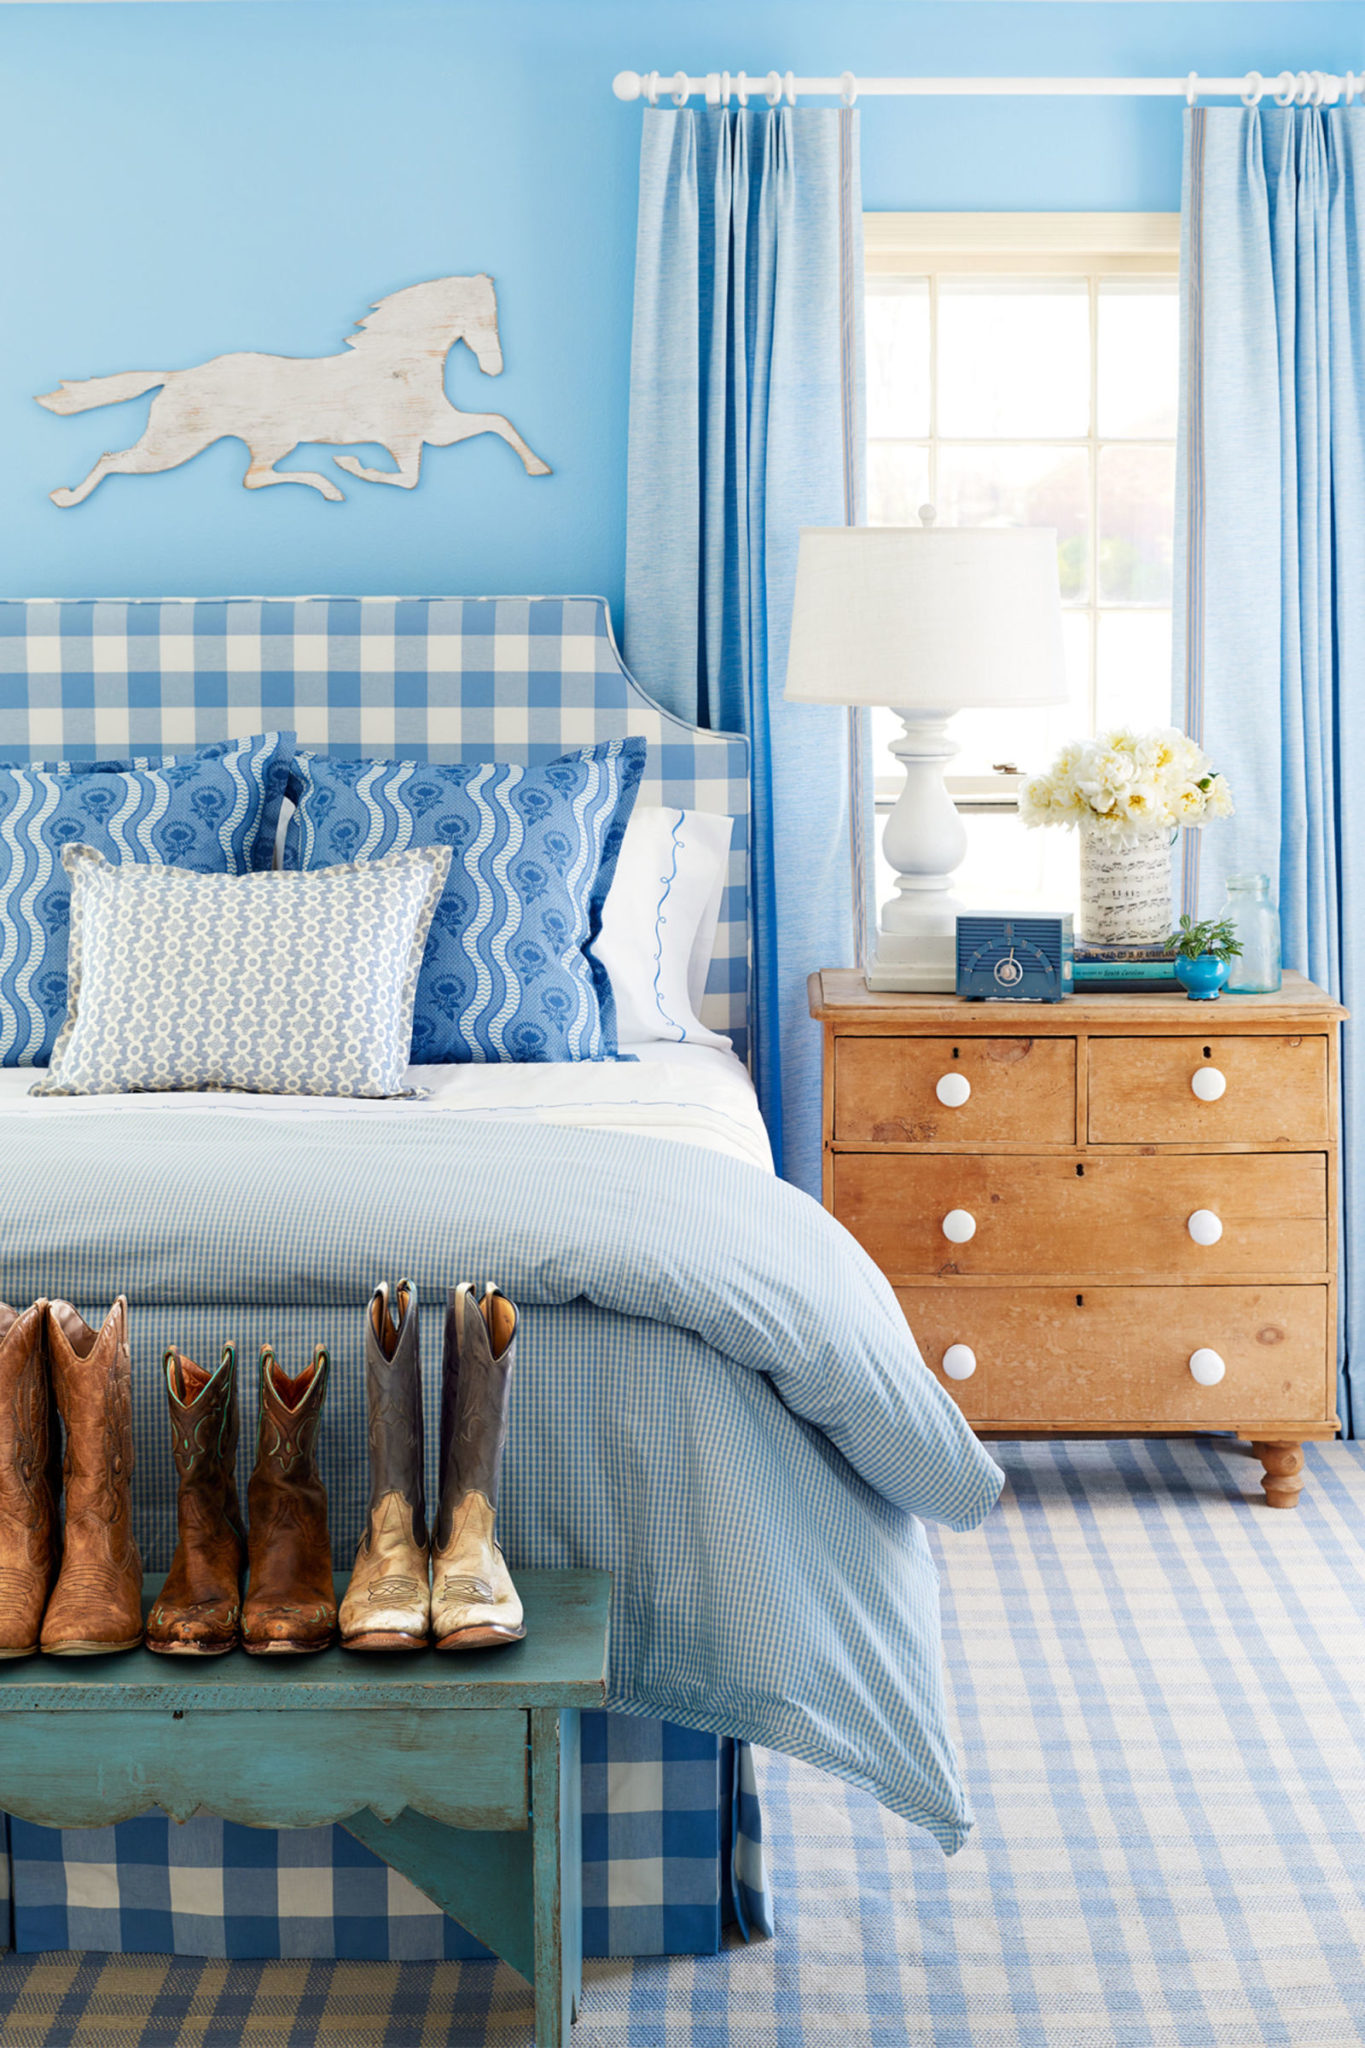 Moody Interior: Breathtaking Bedrooms in Shades of Blue